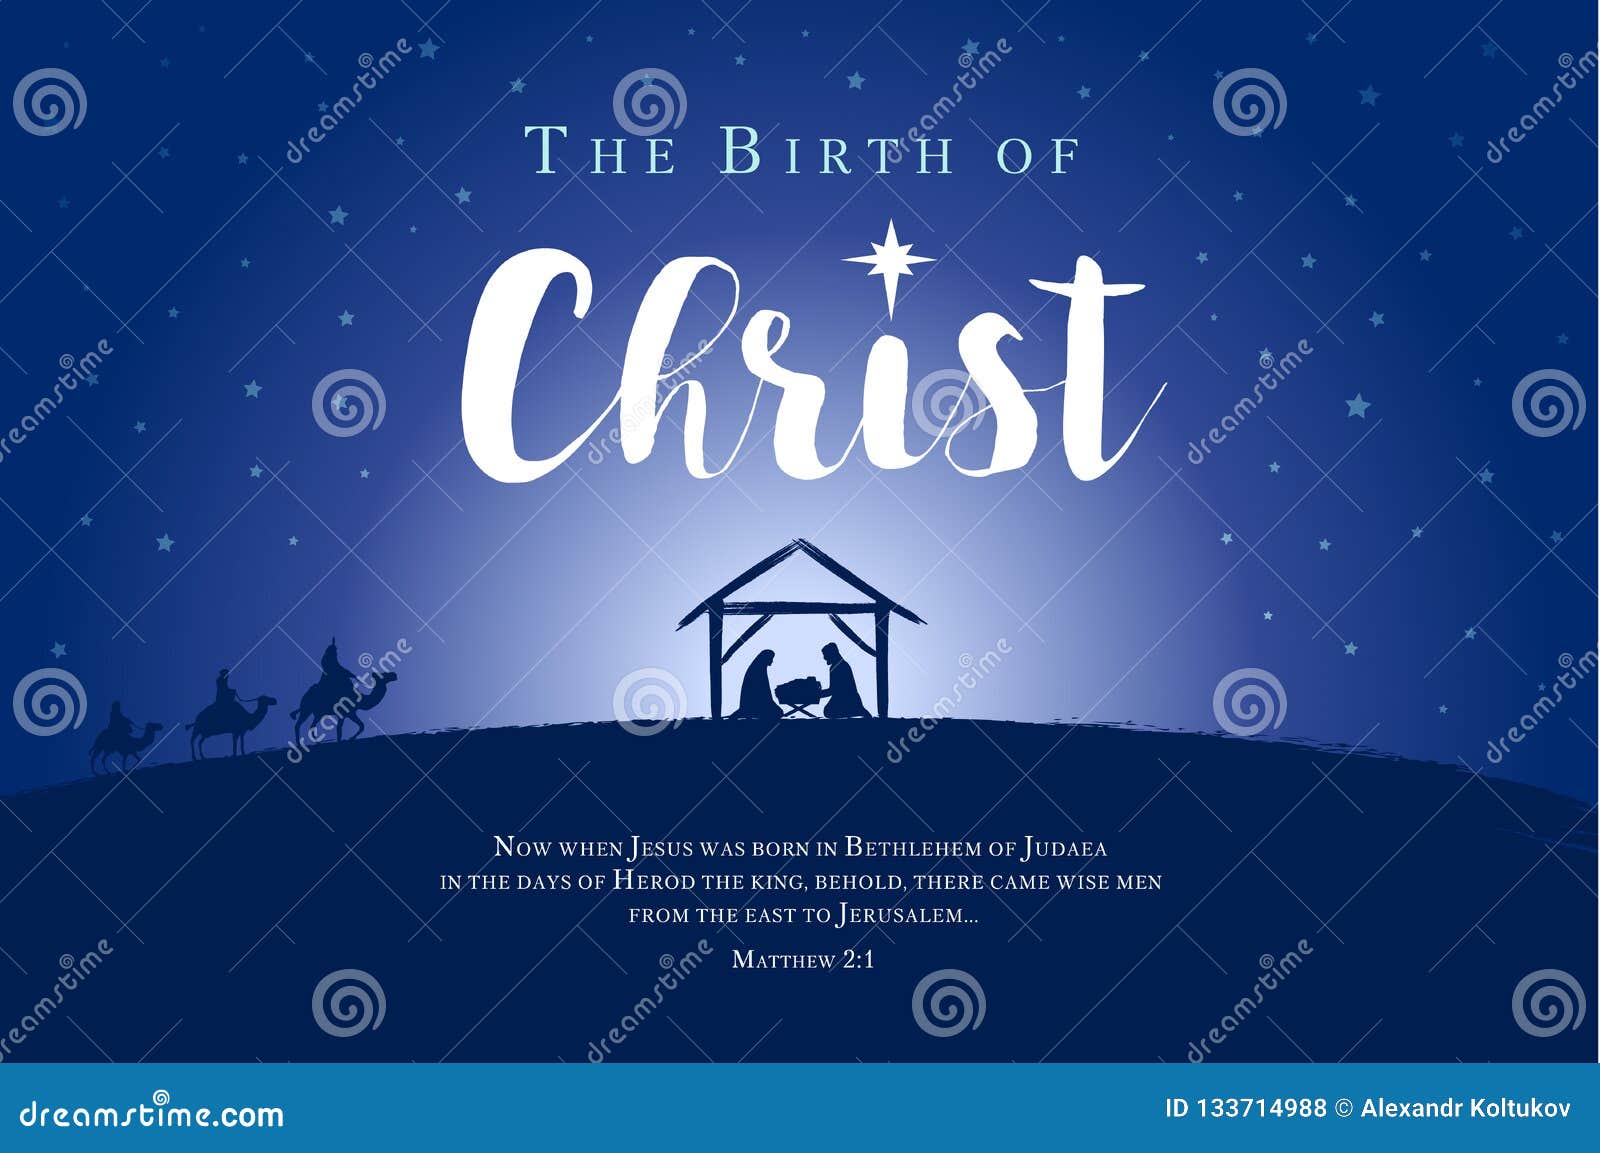 Merry Christmas, Birth of Christ Banner Stock Vector ...